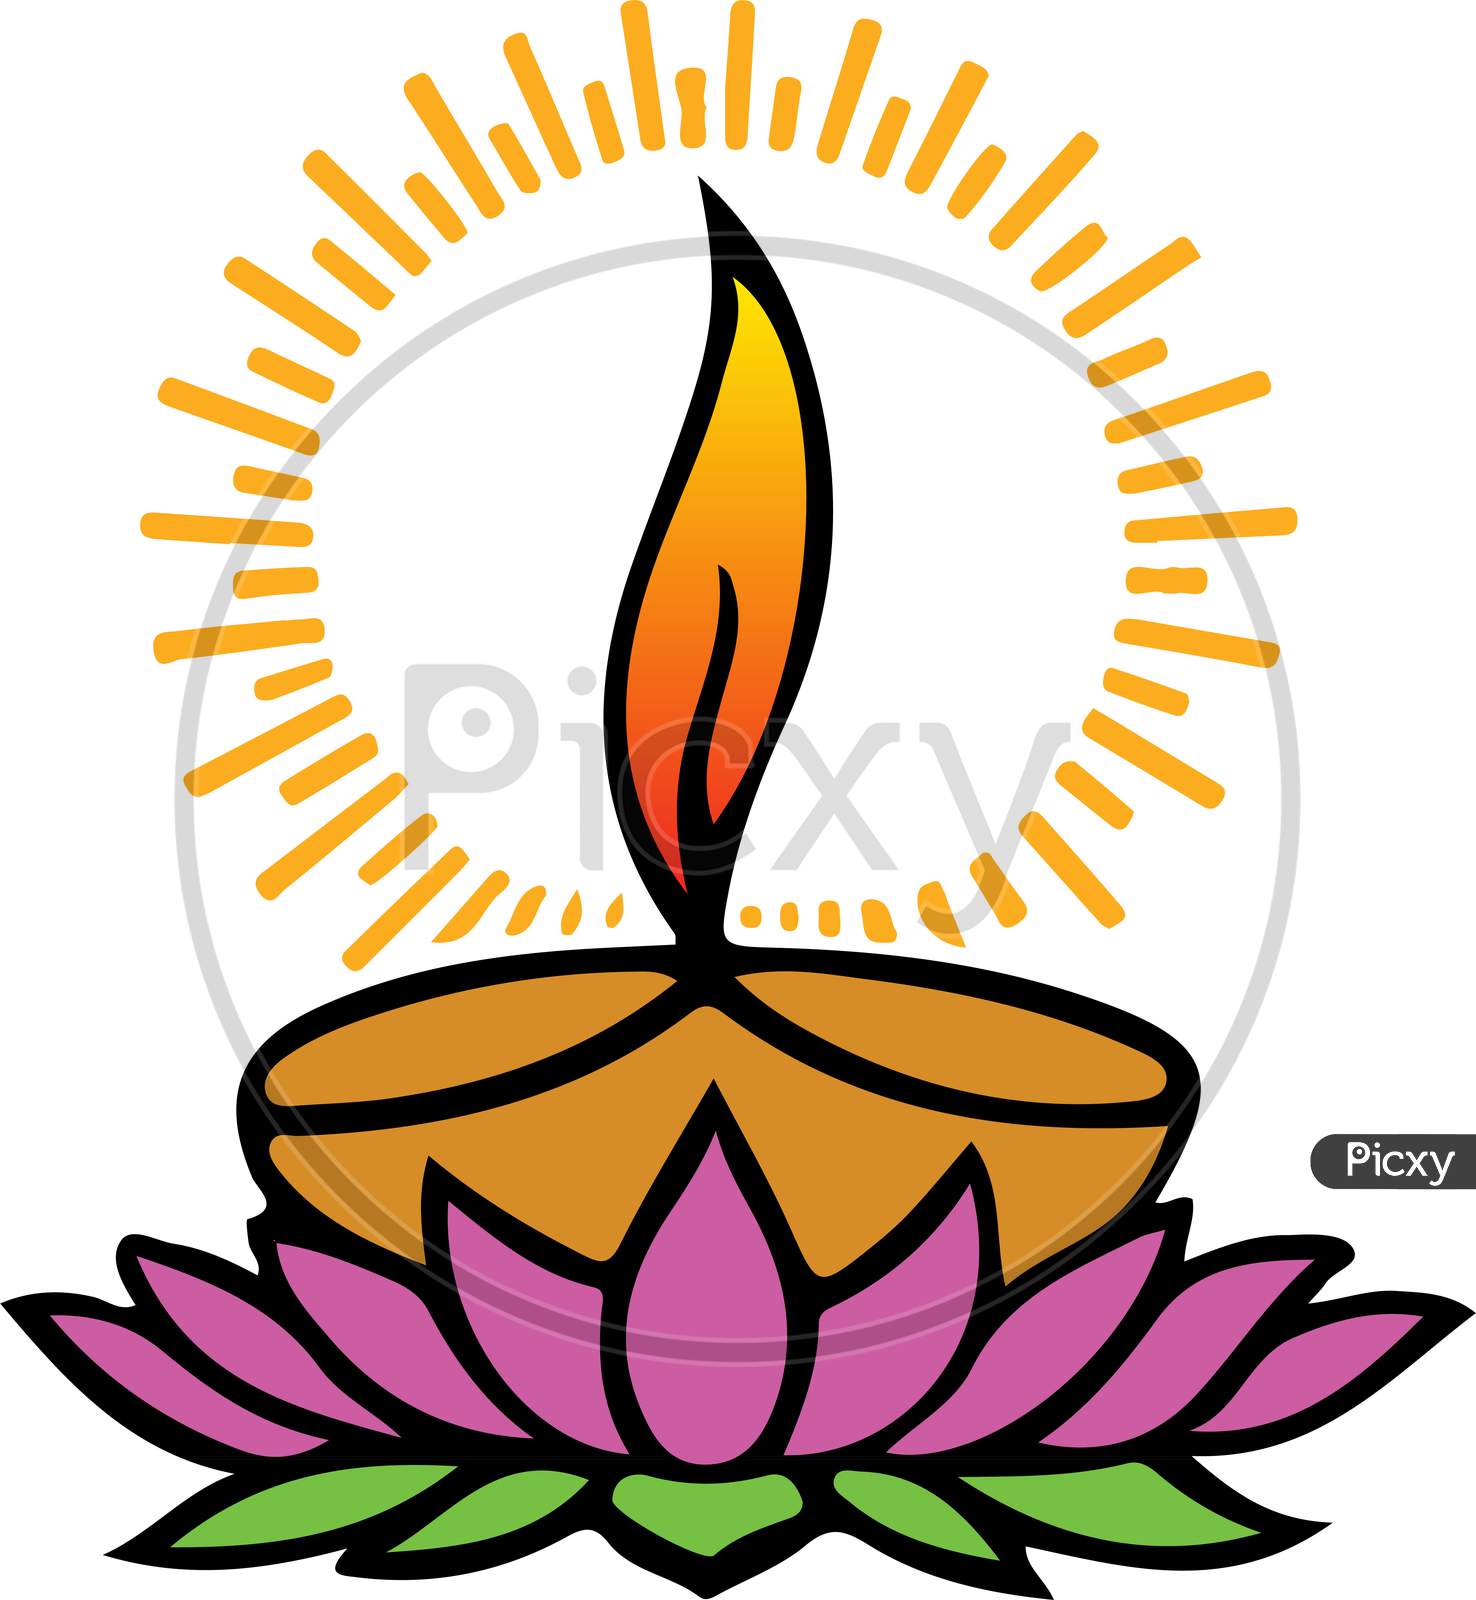 Image of Sketch of Happy Diwali Stylish Diya Indian festival lamp